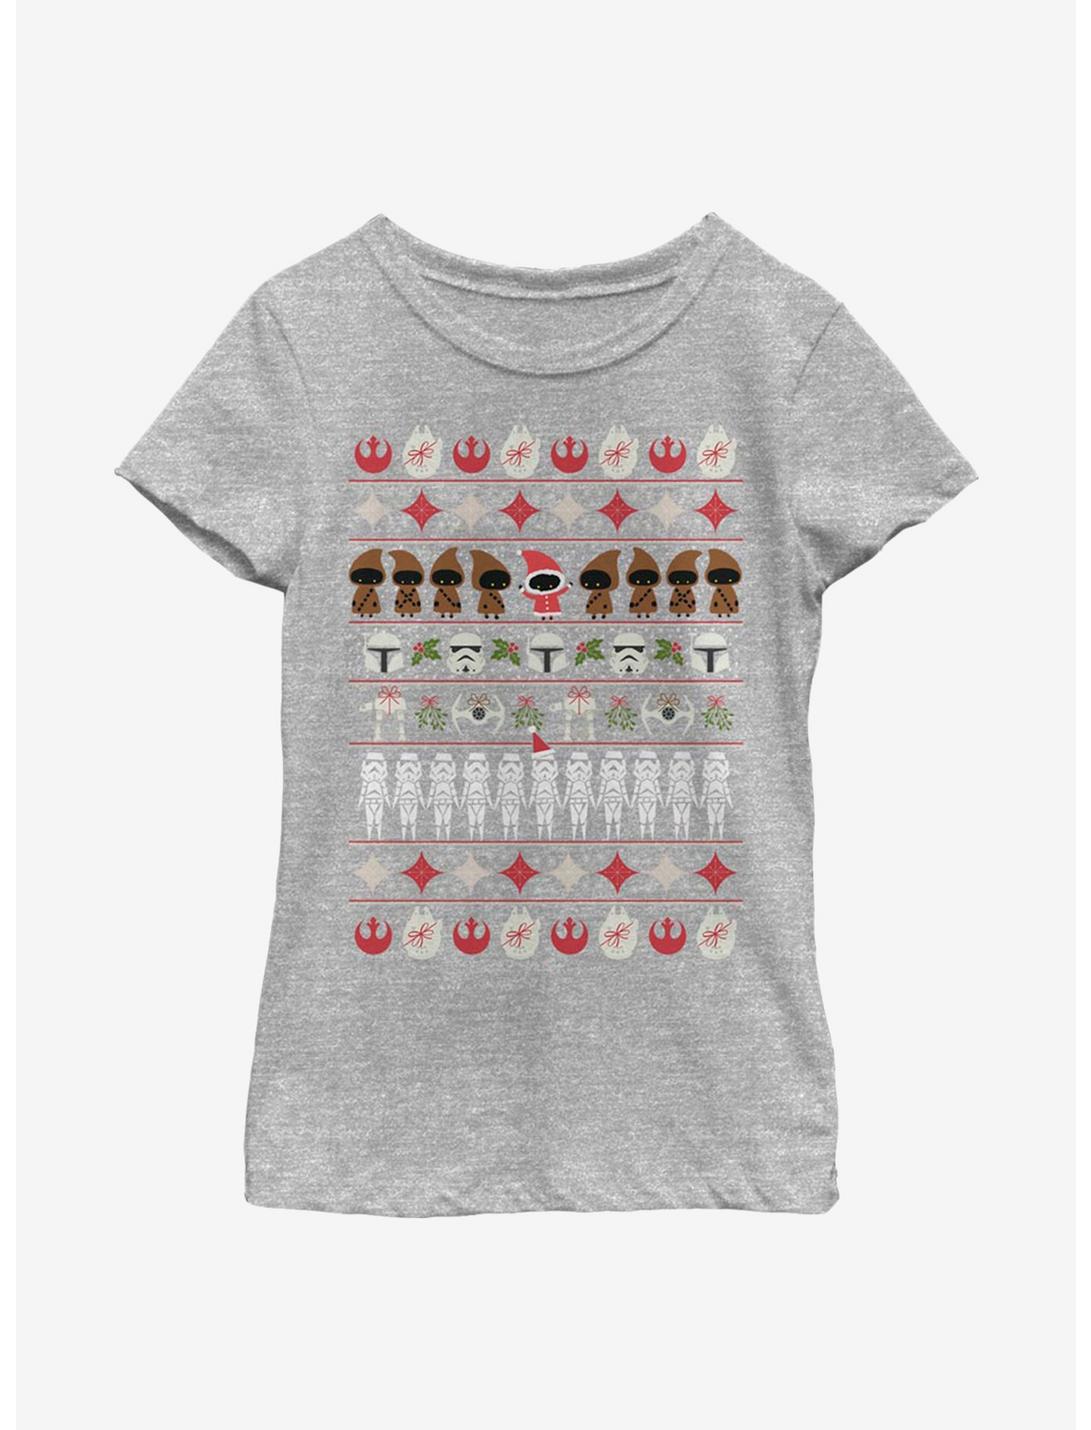 Star Wars Ugly Christmas Youth Girls T-Shirt, ATH HTR, hi-res